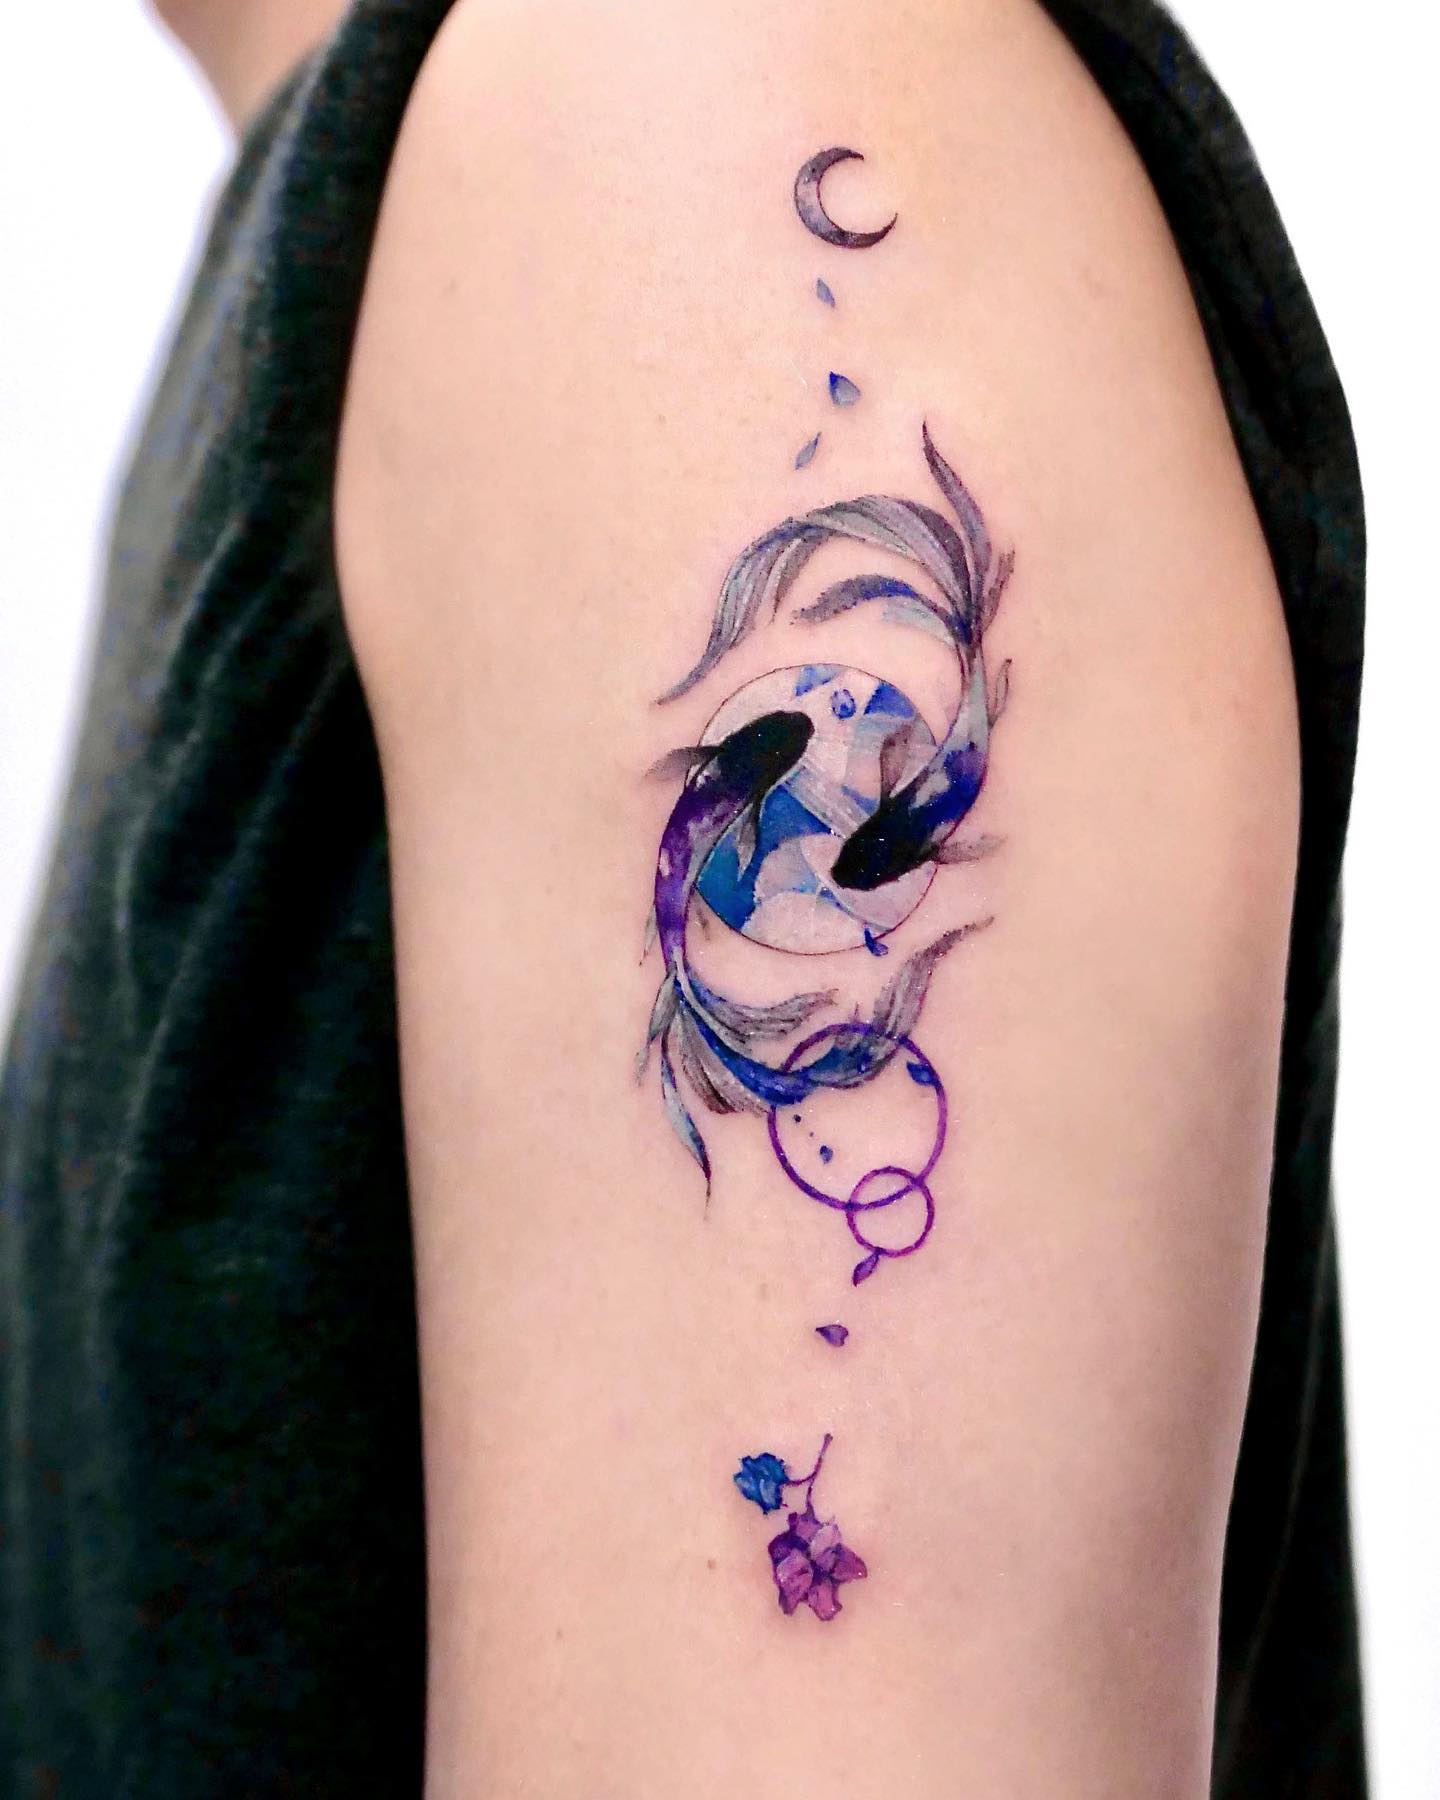 Chinese Fish Tattoo on Arm